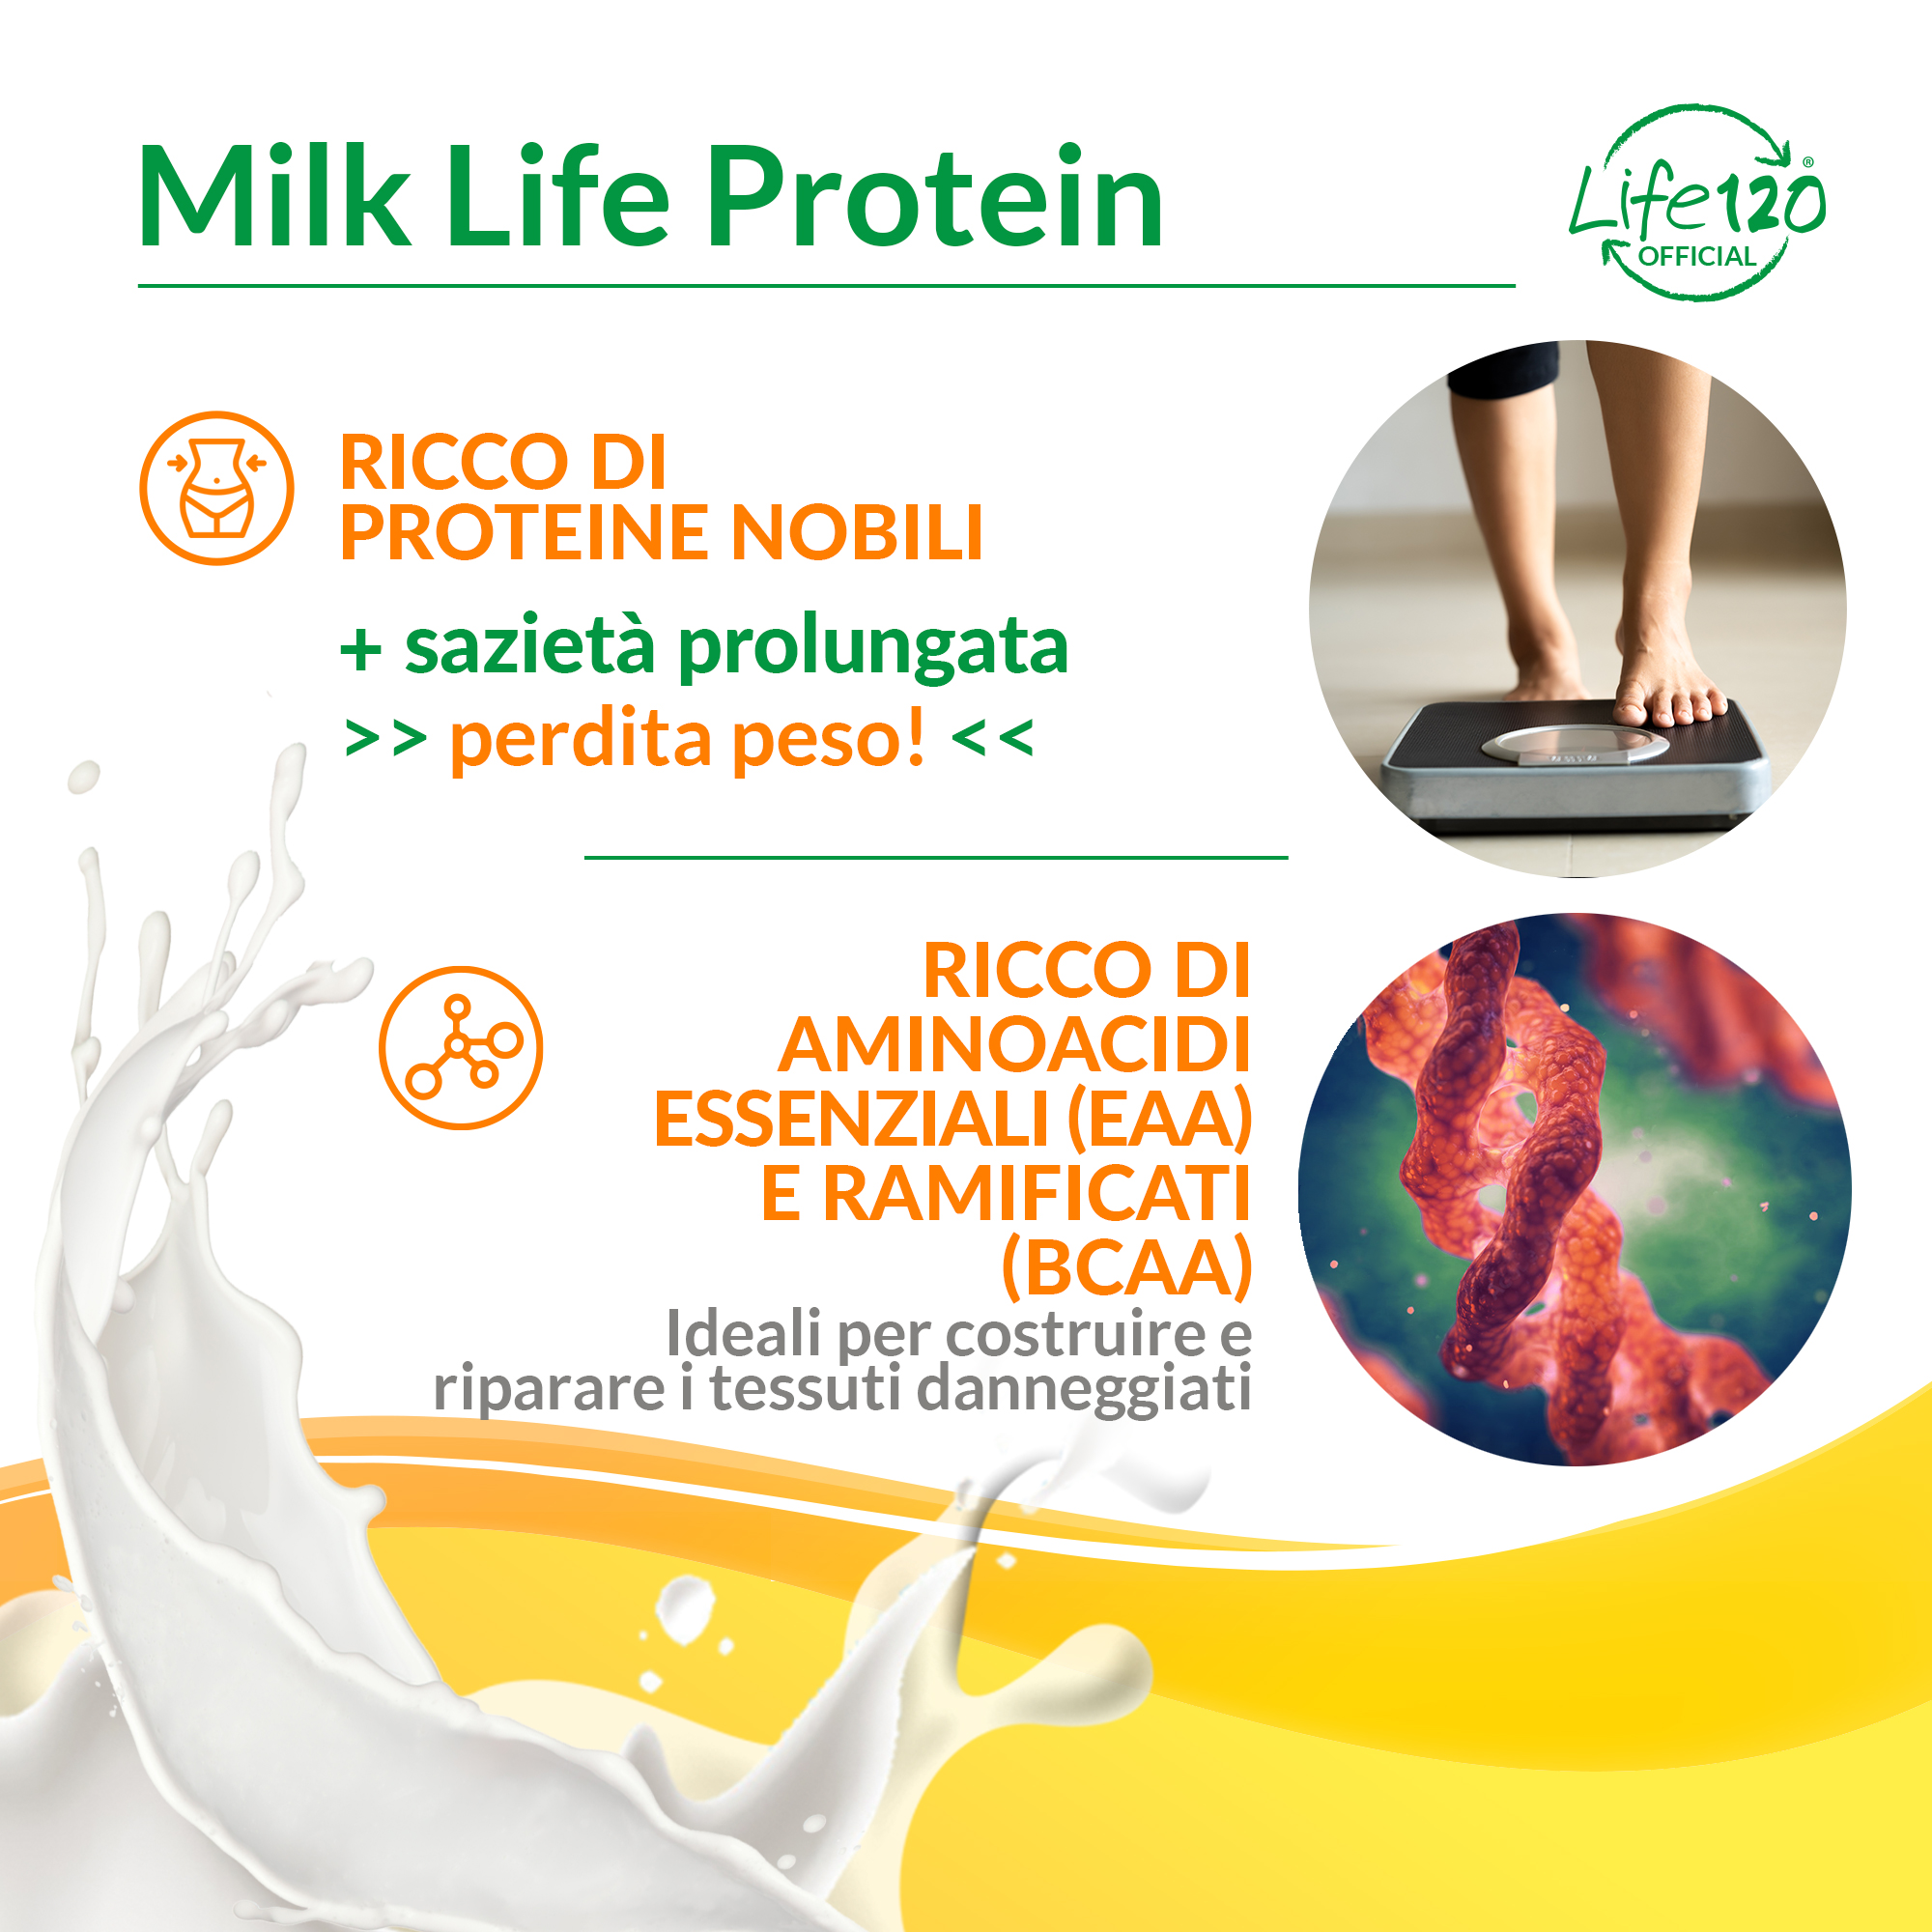 Milk Life Protein